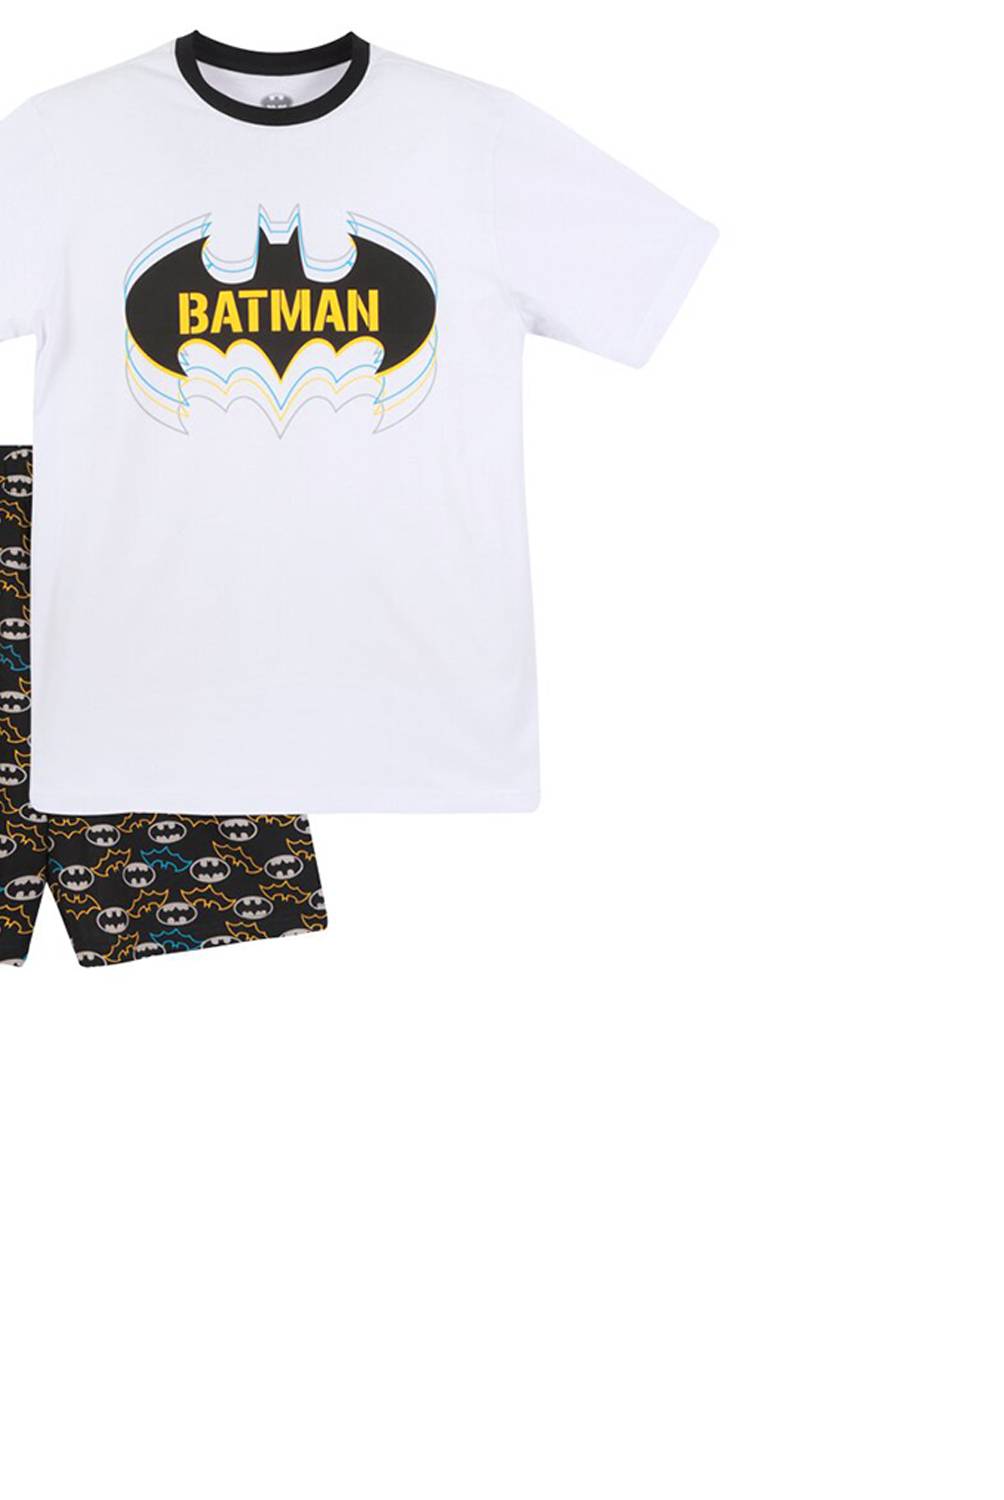 DC COMICS - Pijama Hombre Batman Style Blanco